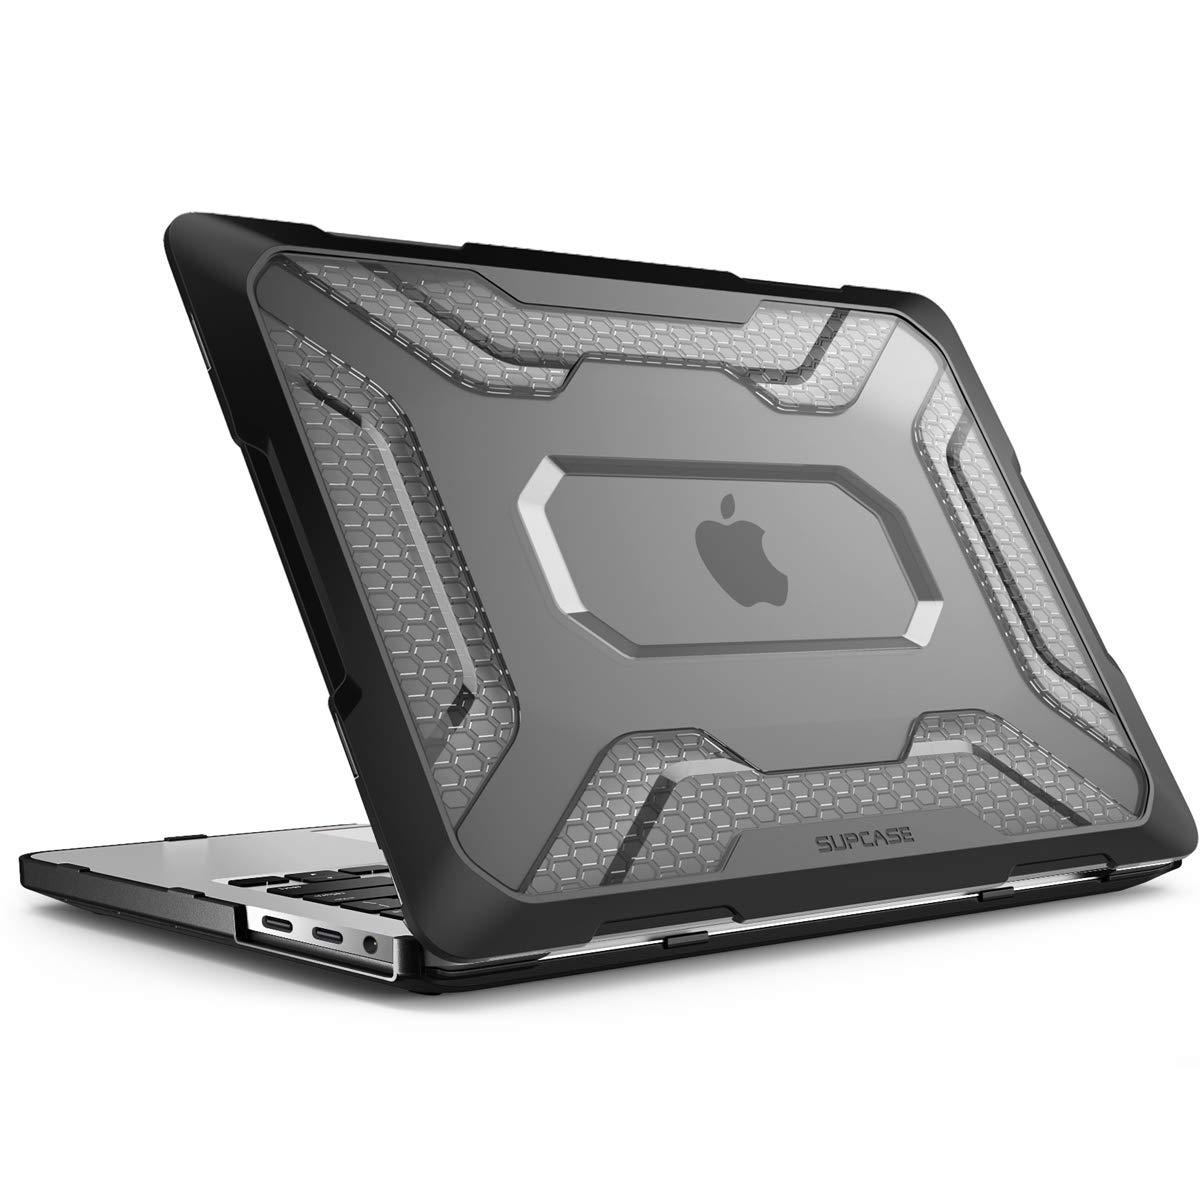 Supcase UB Series Hybrid Protective Case for Macbook Pro 13"(2018, 2017, 2016), Frost/Black Macbook Case Supcase 